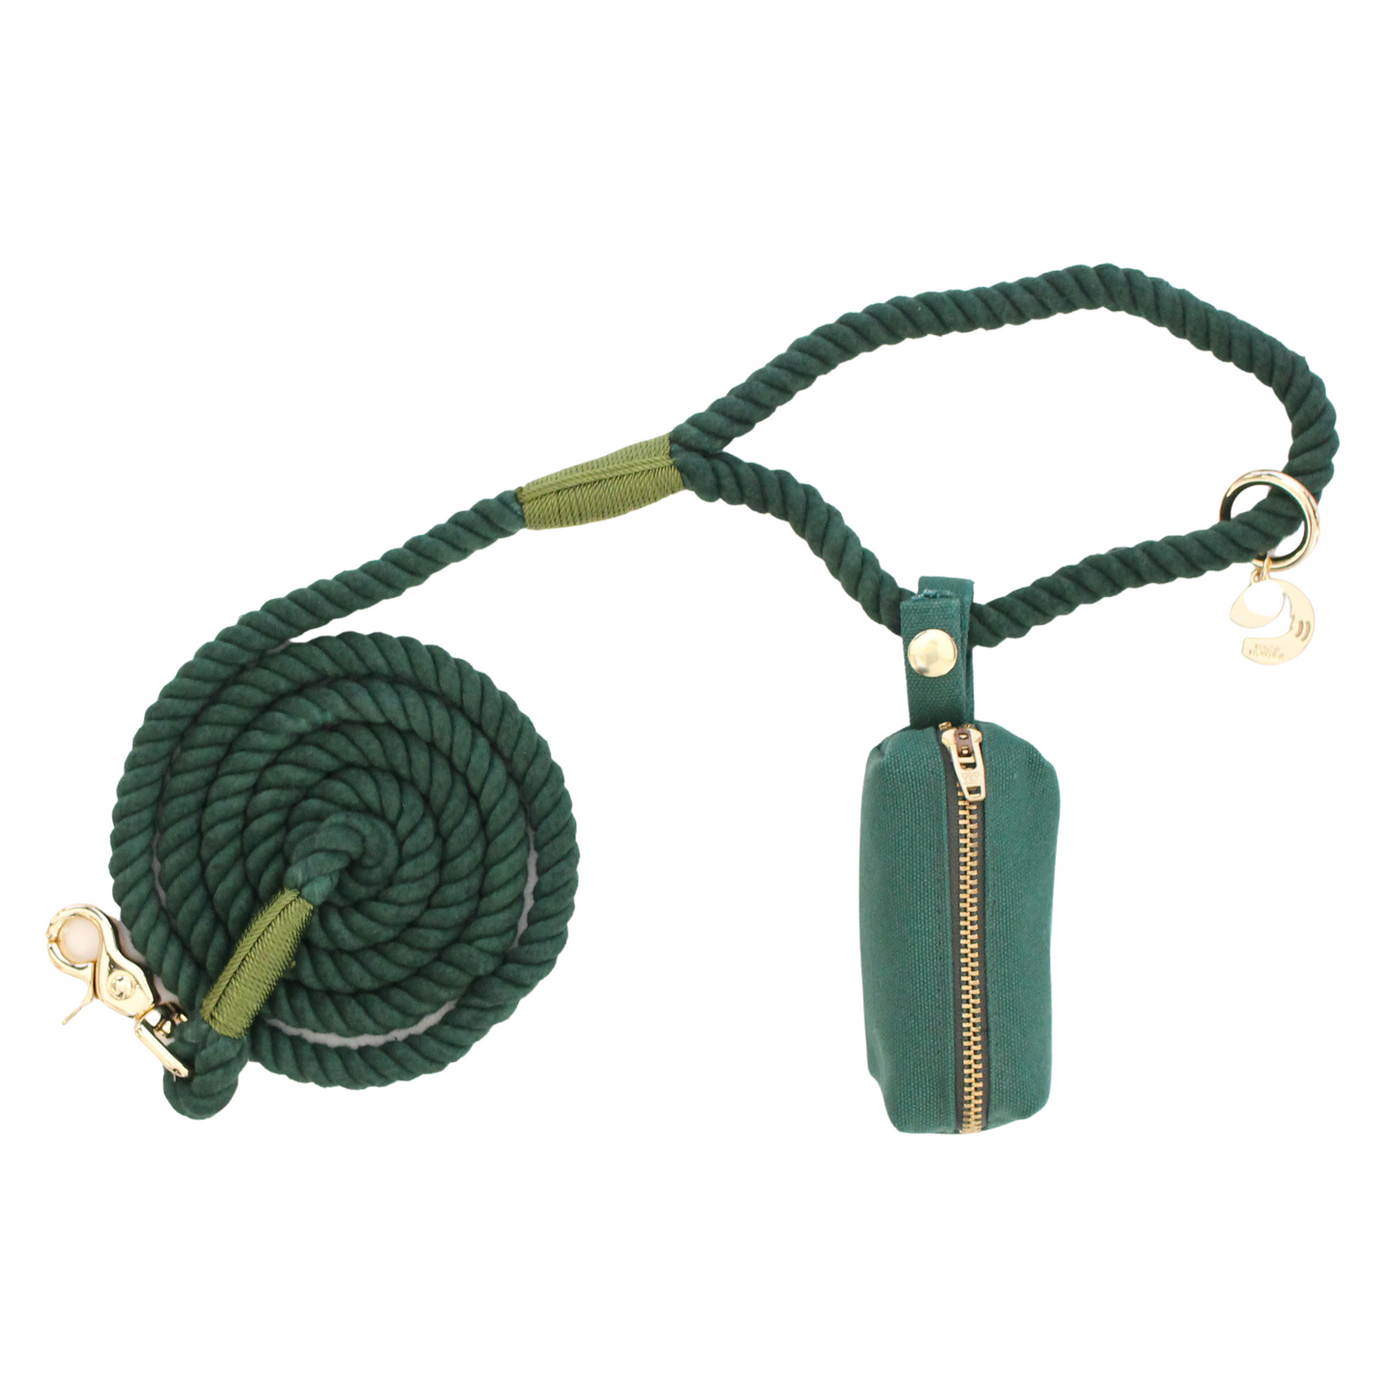 Evergreen Rope Dog Leash + Evergreen Waste Bag Holder